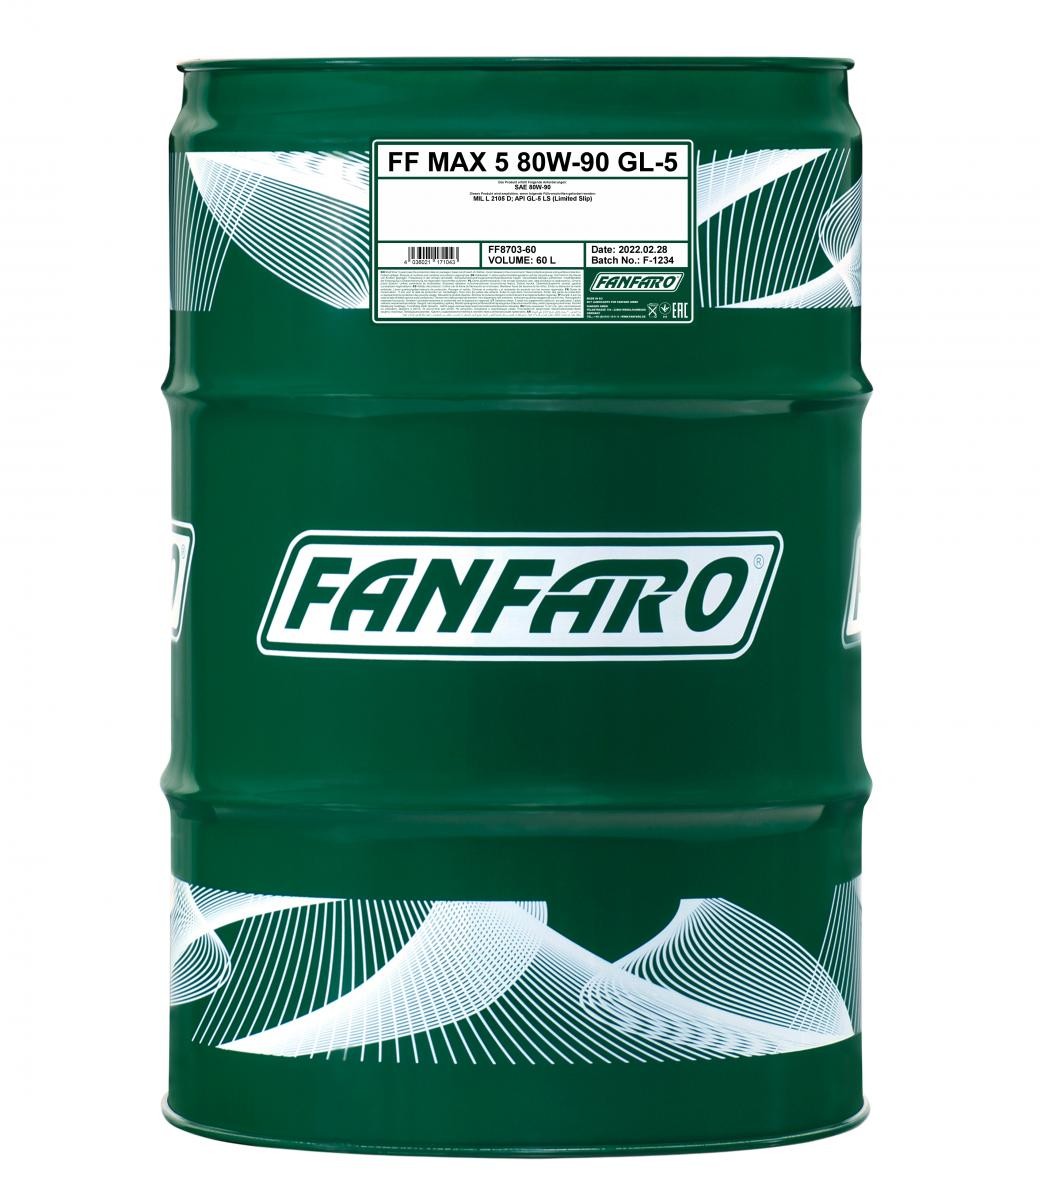 Original FF8703-60 FANFARO Gearbox oil VOLVO